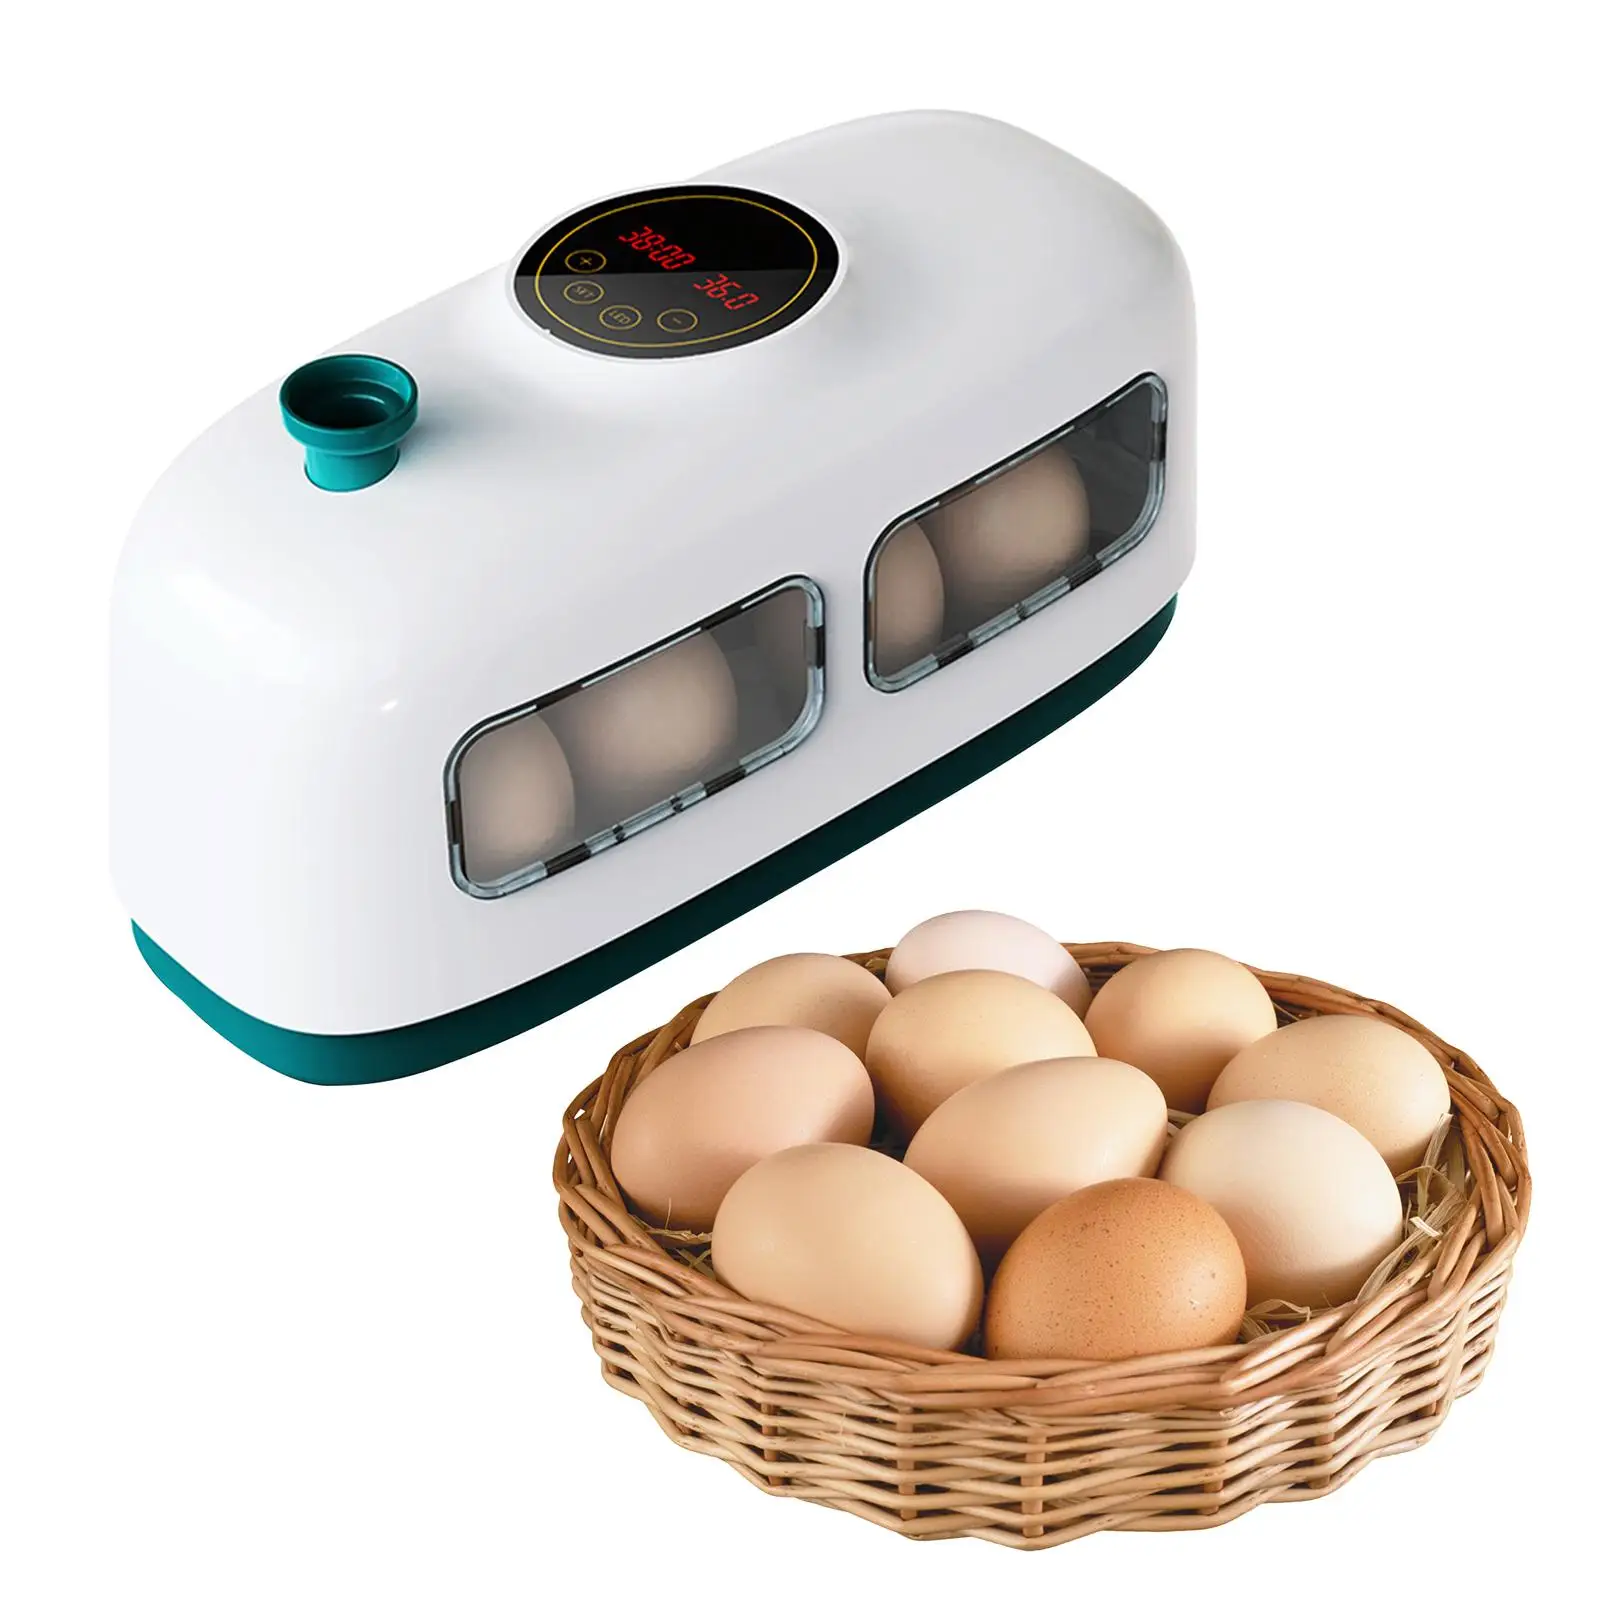 Egg Incubator Electric Manual Egg Turner Poultry Hatcher for 